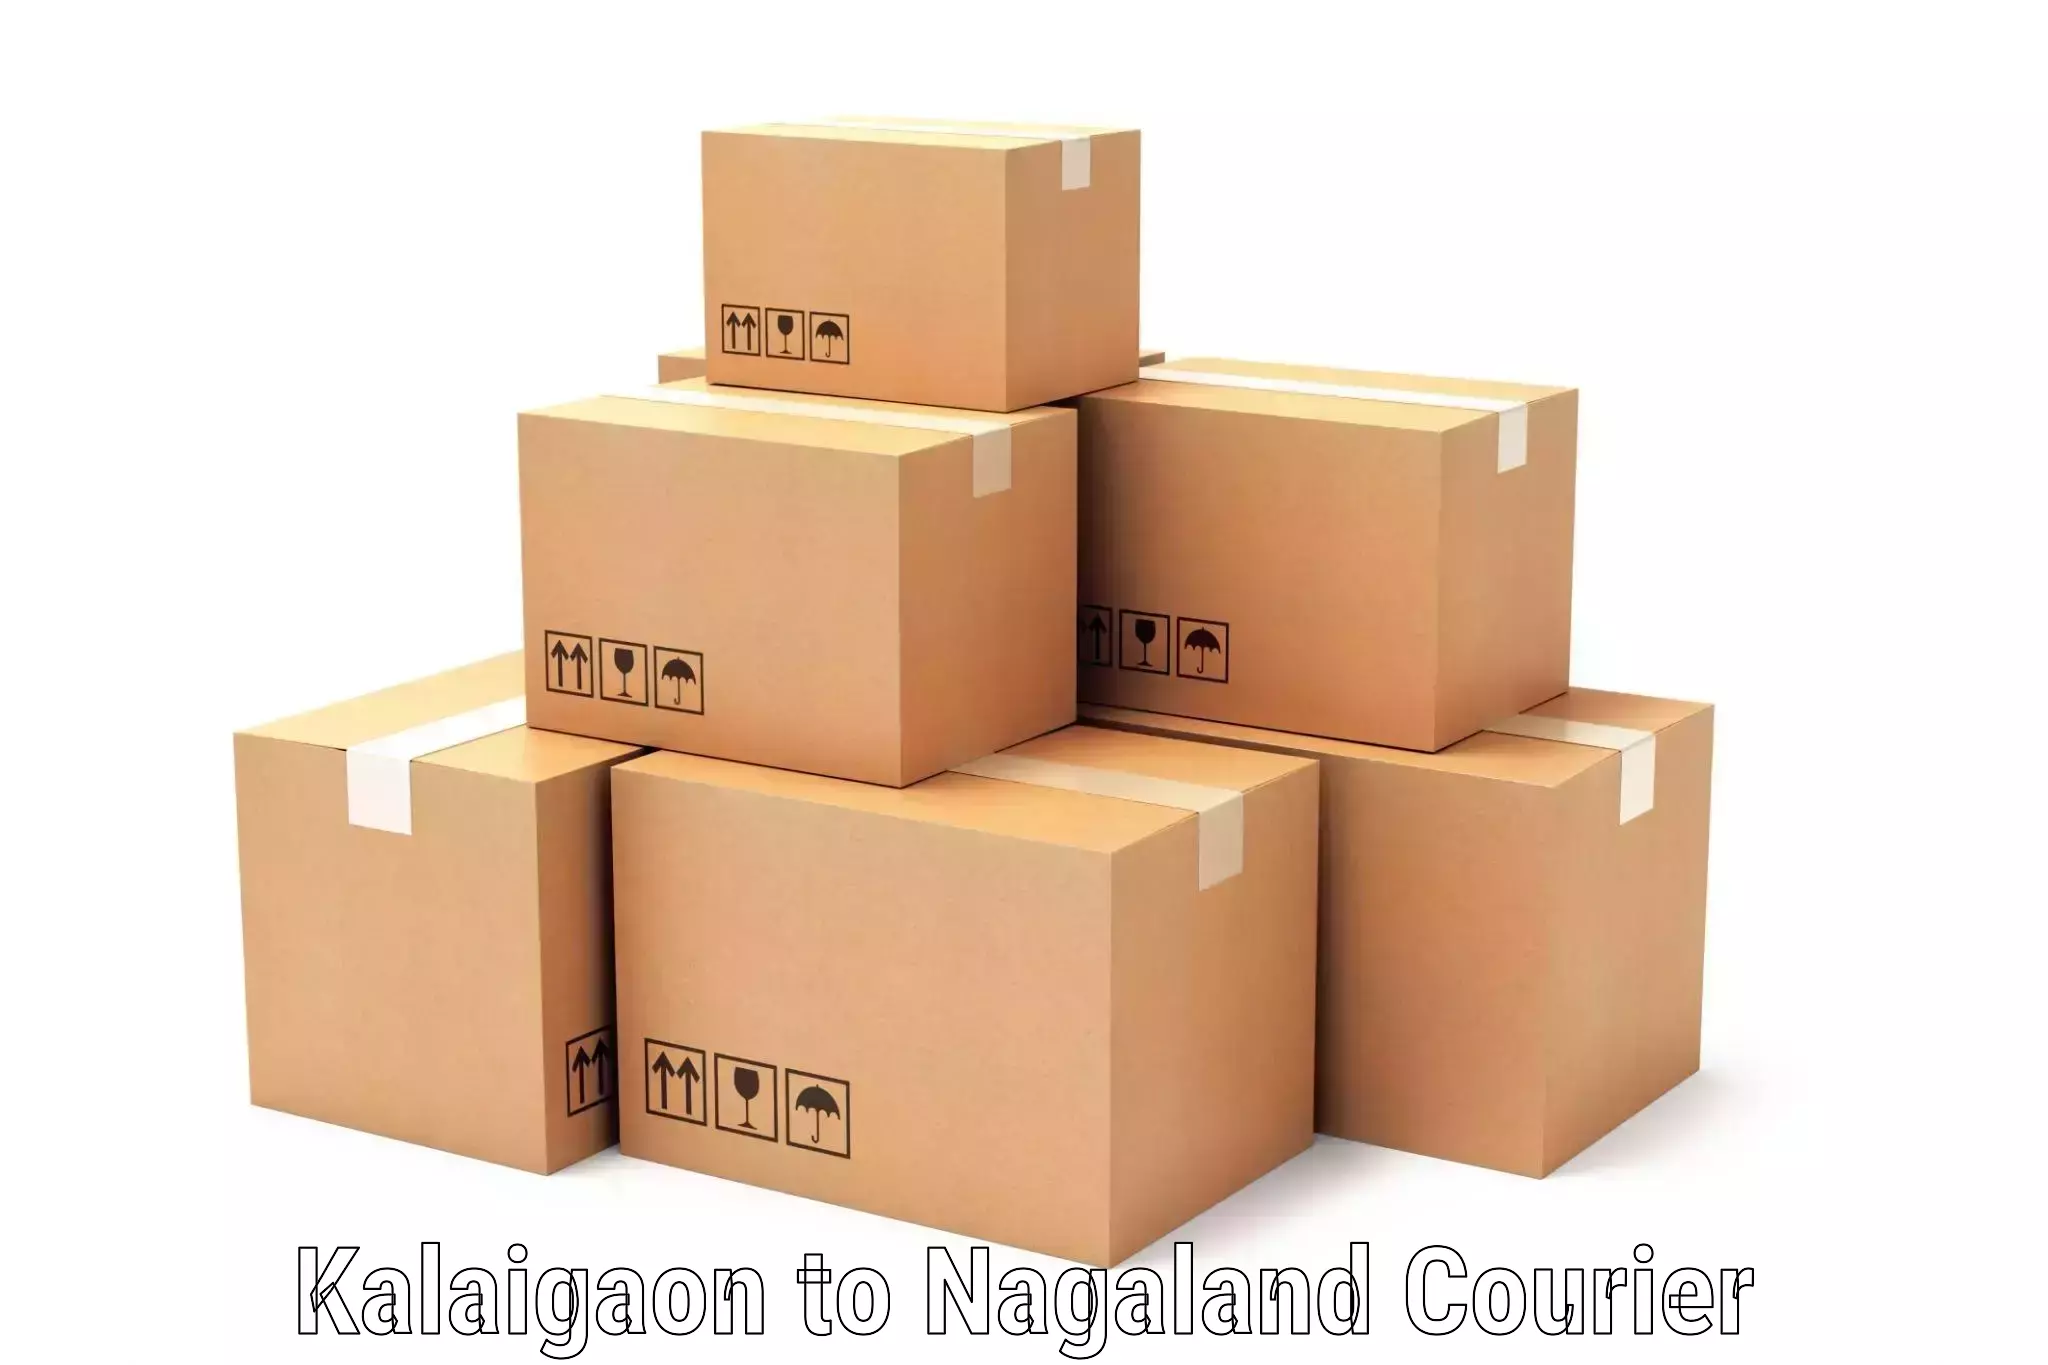 Tech-enabled shipping Kalaigaon to Dimapur